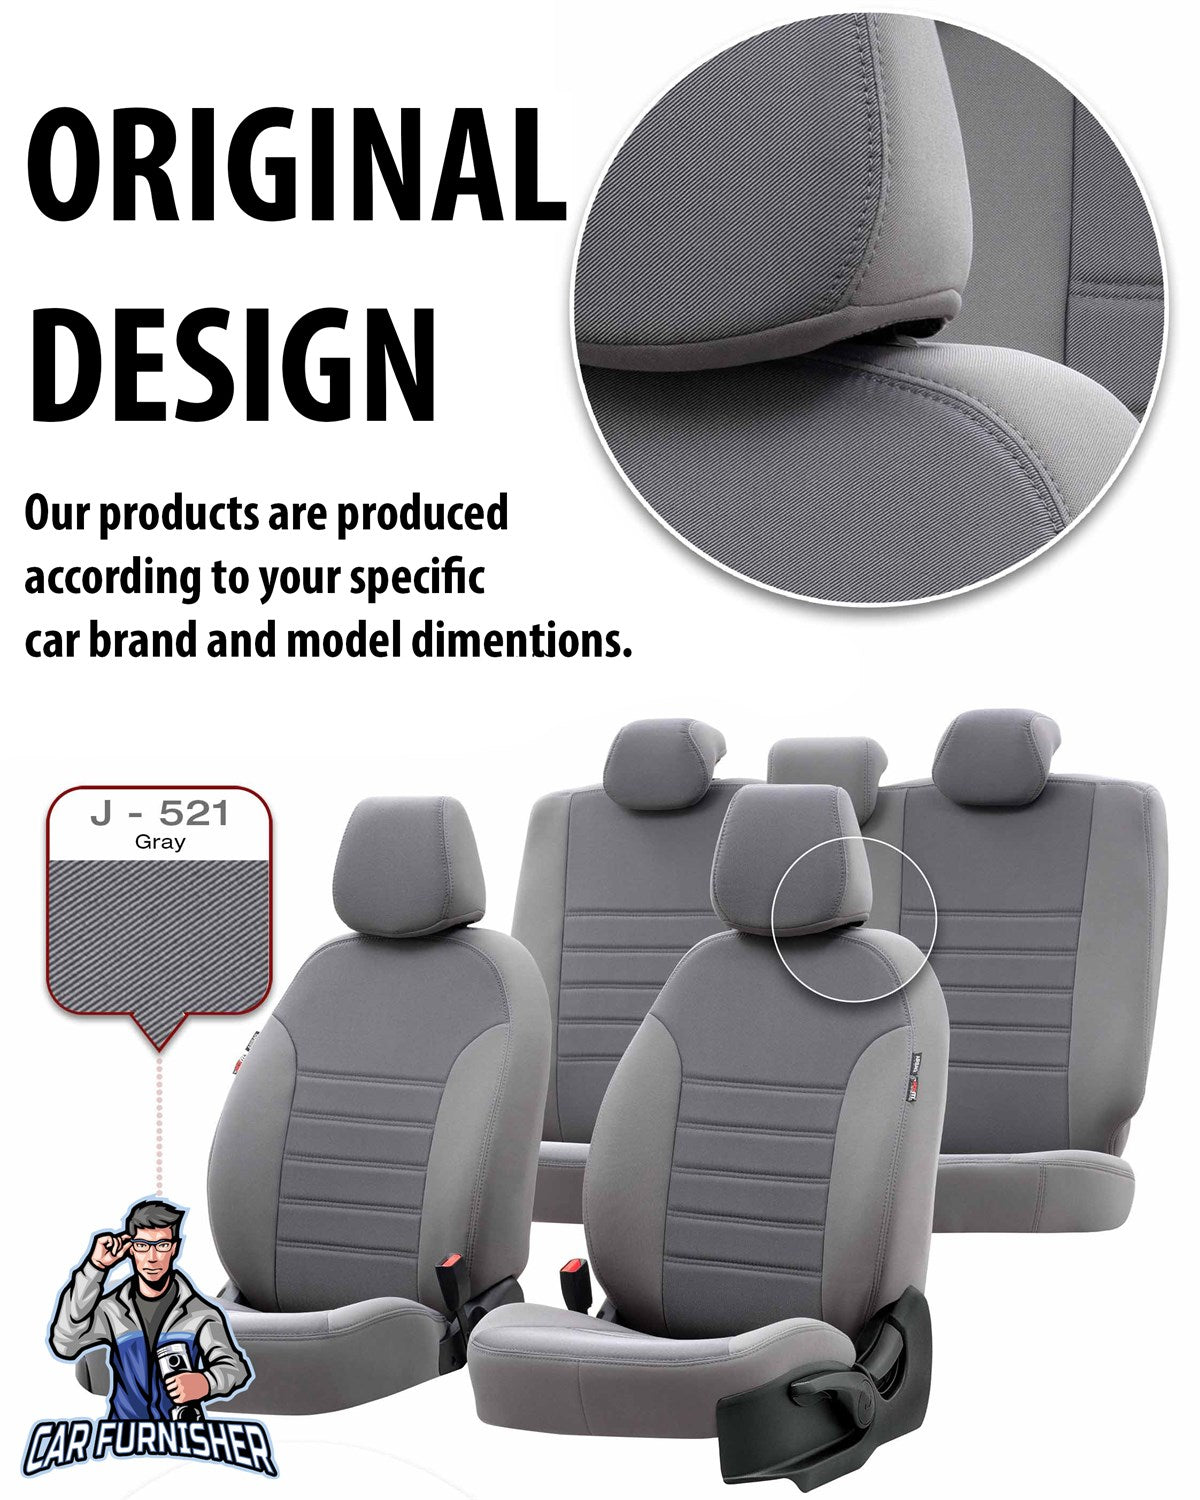 Volkswagen Scirocco Seat Cover Original Jacquard Design Smoked Jacquard Fabric